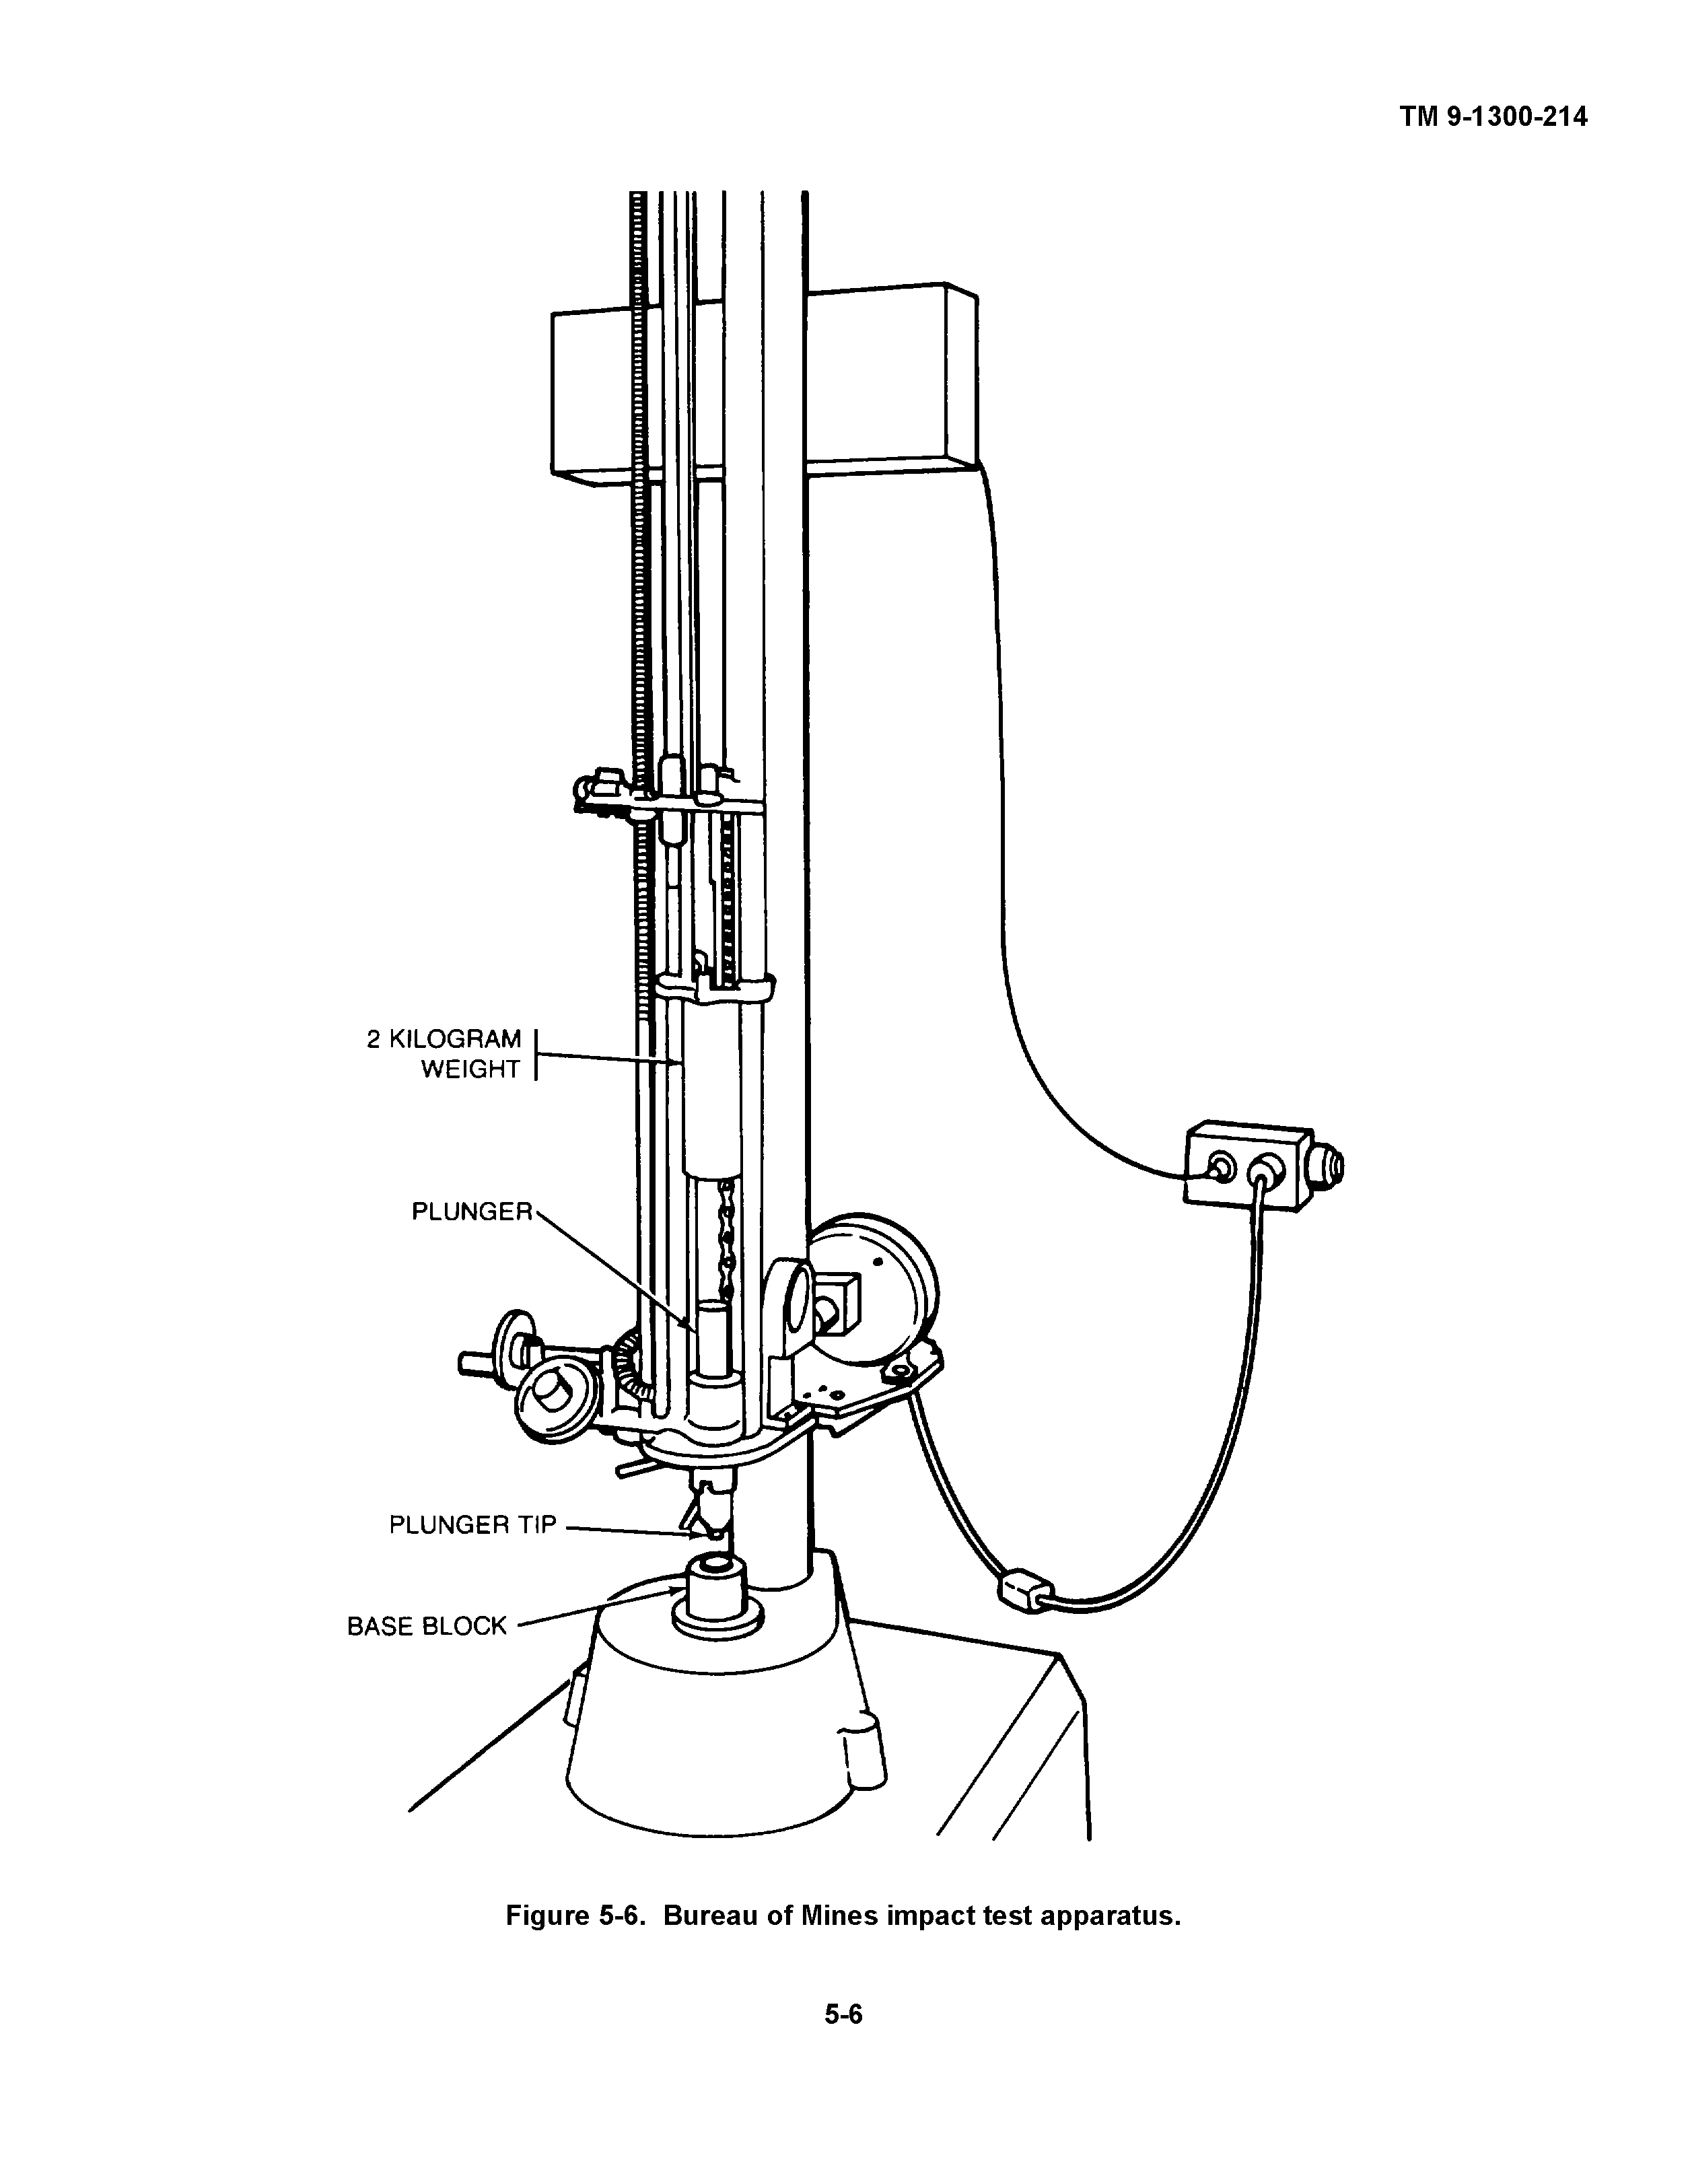 Figure 5-6. Bureau of Mines impact test apparatus.